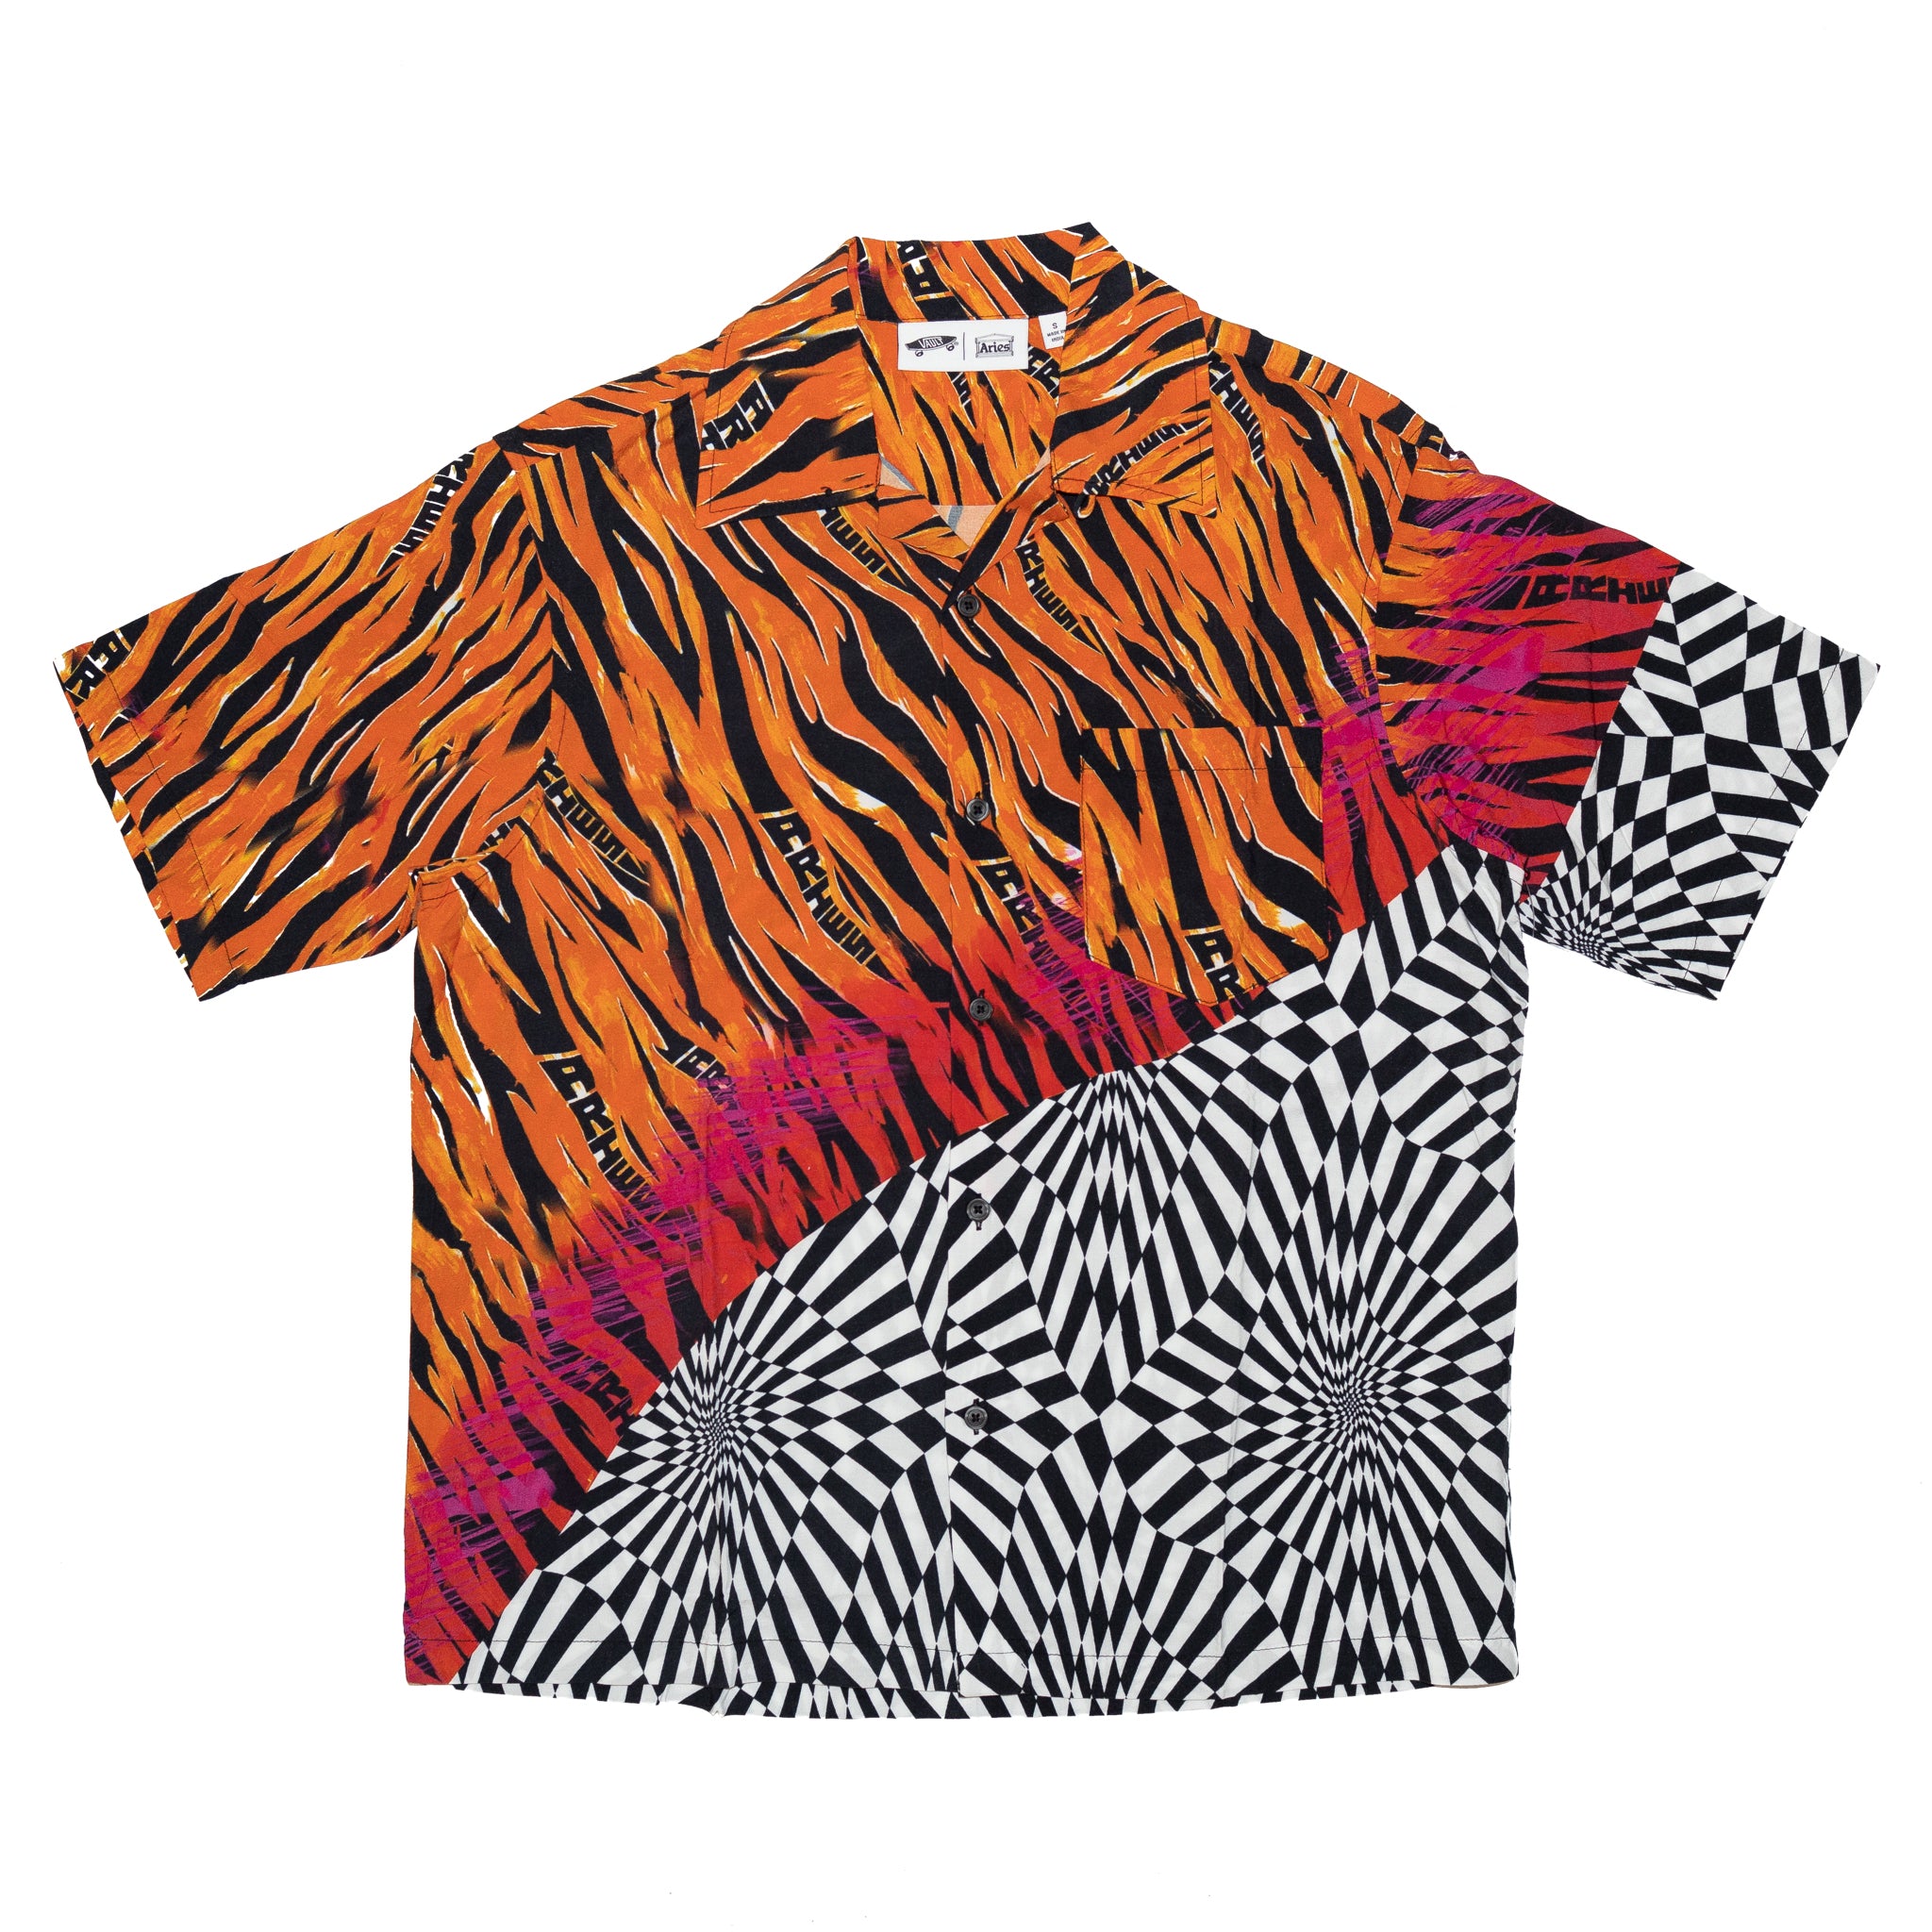 Vans Vault x Aries Distorted Pattern Shirt